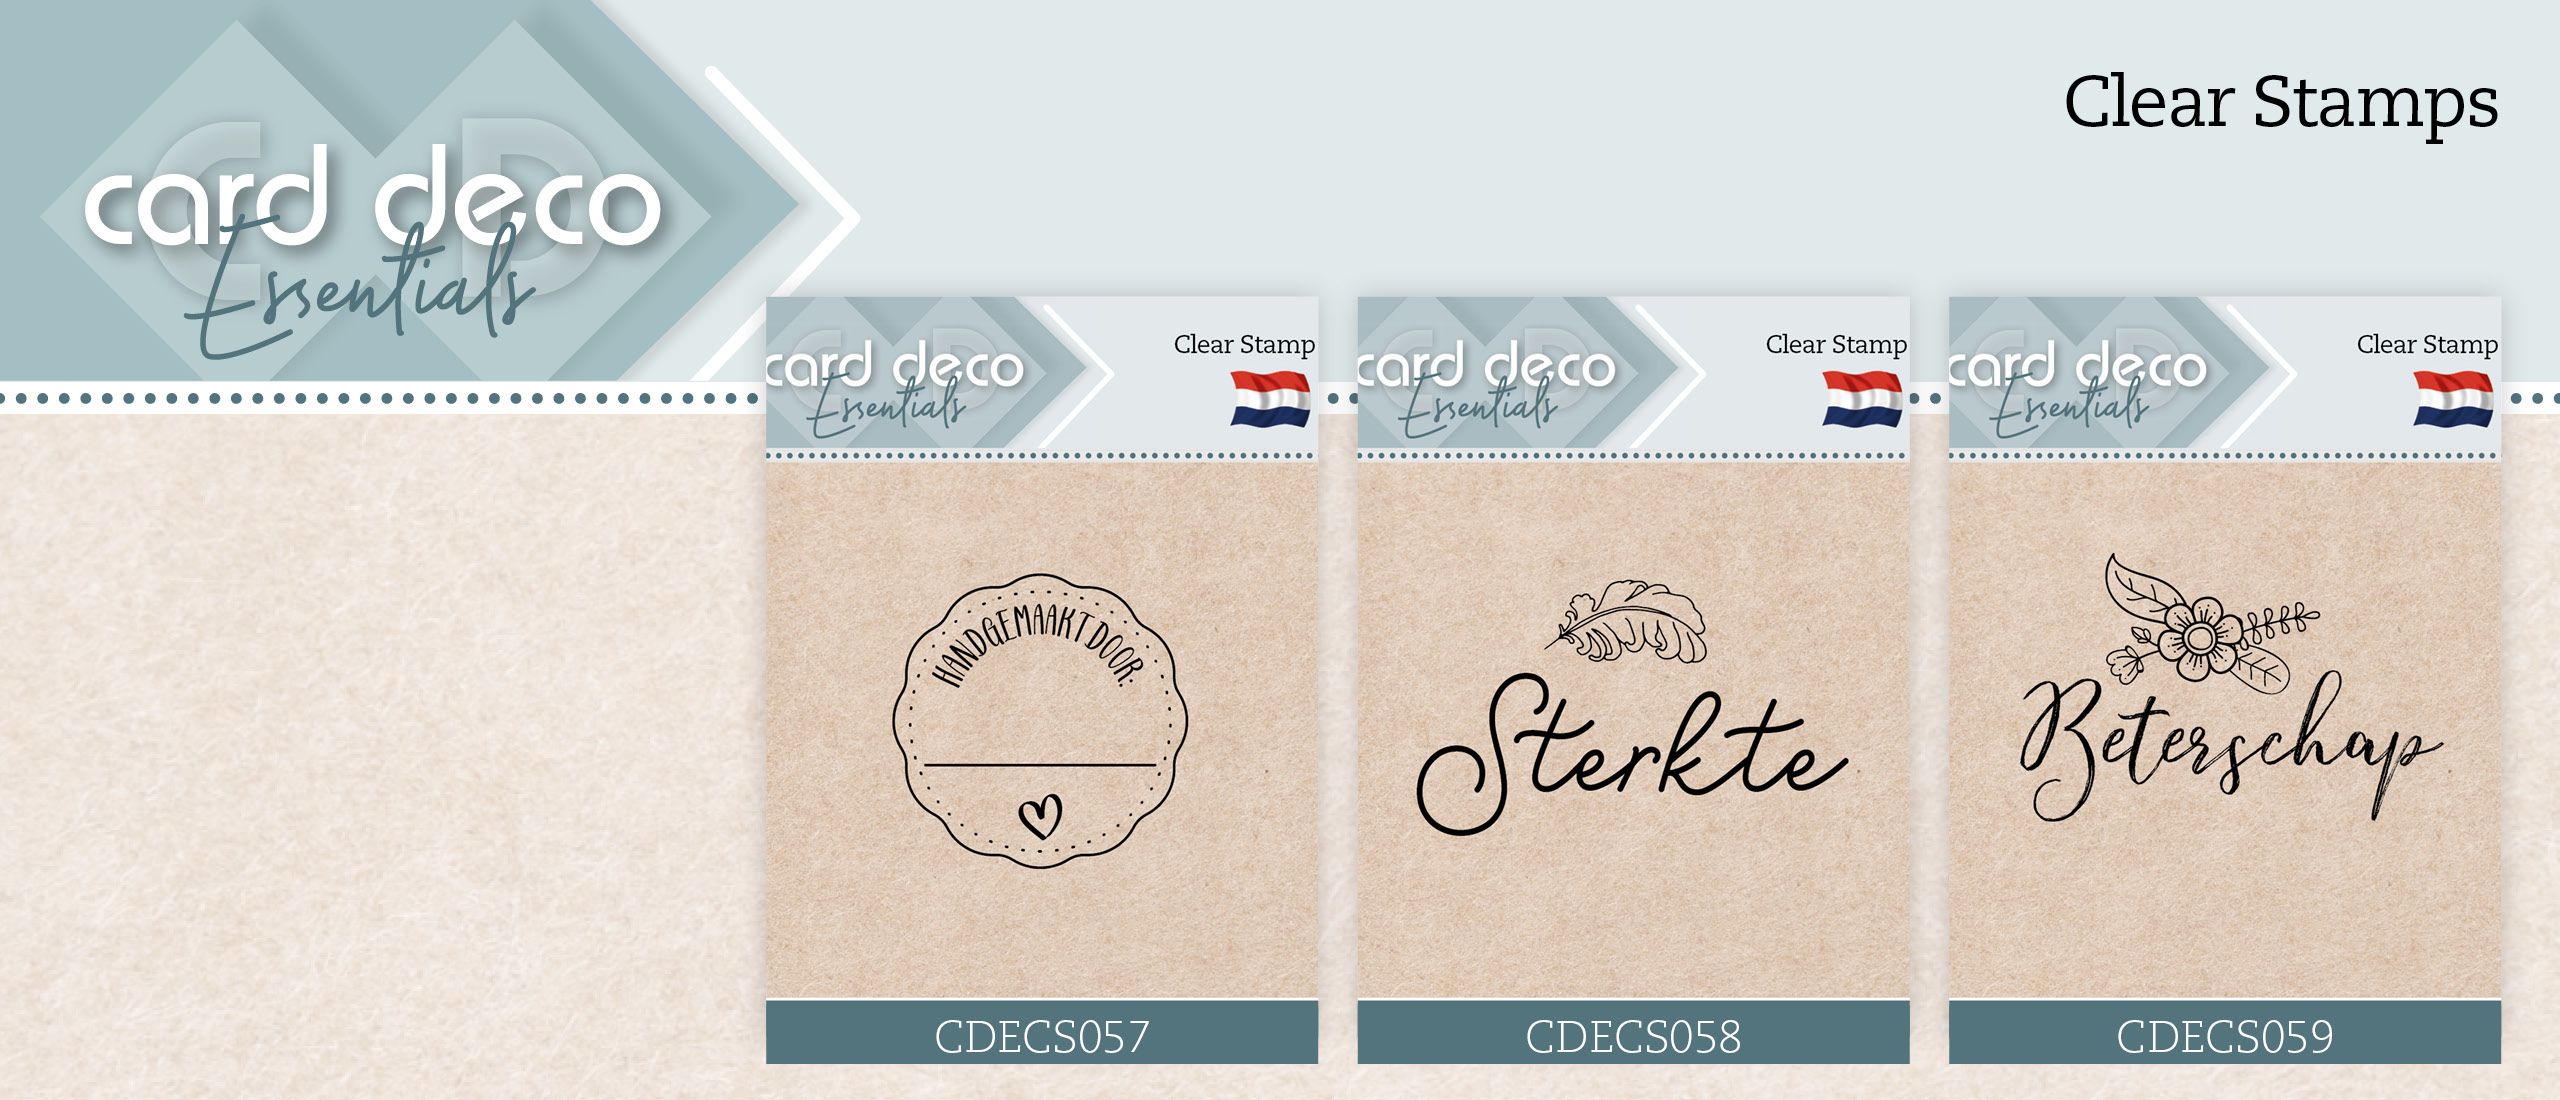 Tekst Clear Stamps: Veel Liefs + Sterkte + Beterschap van Card Deco (CDECS058 t/m CDECS059)